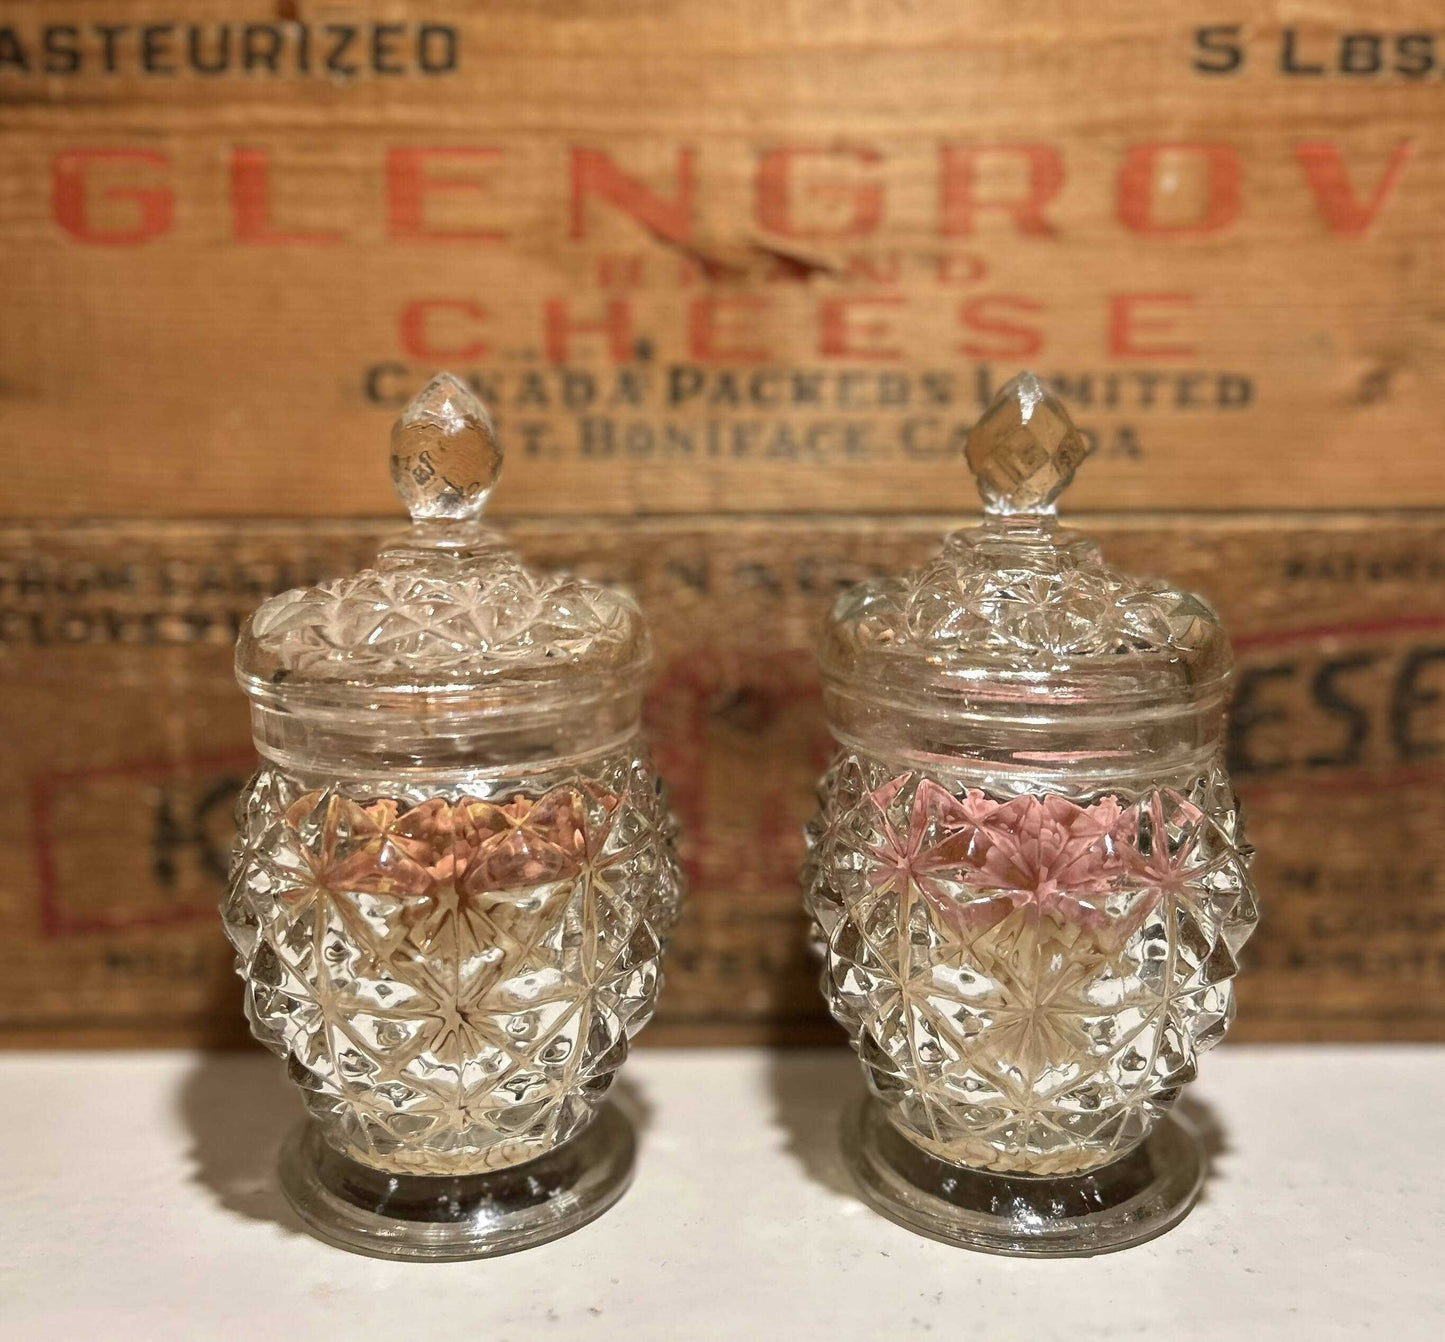 Small Vintage Avon Glass Jar